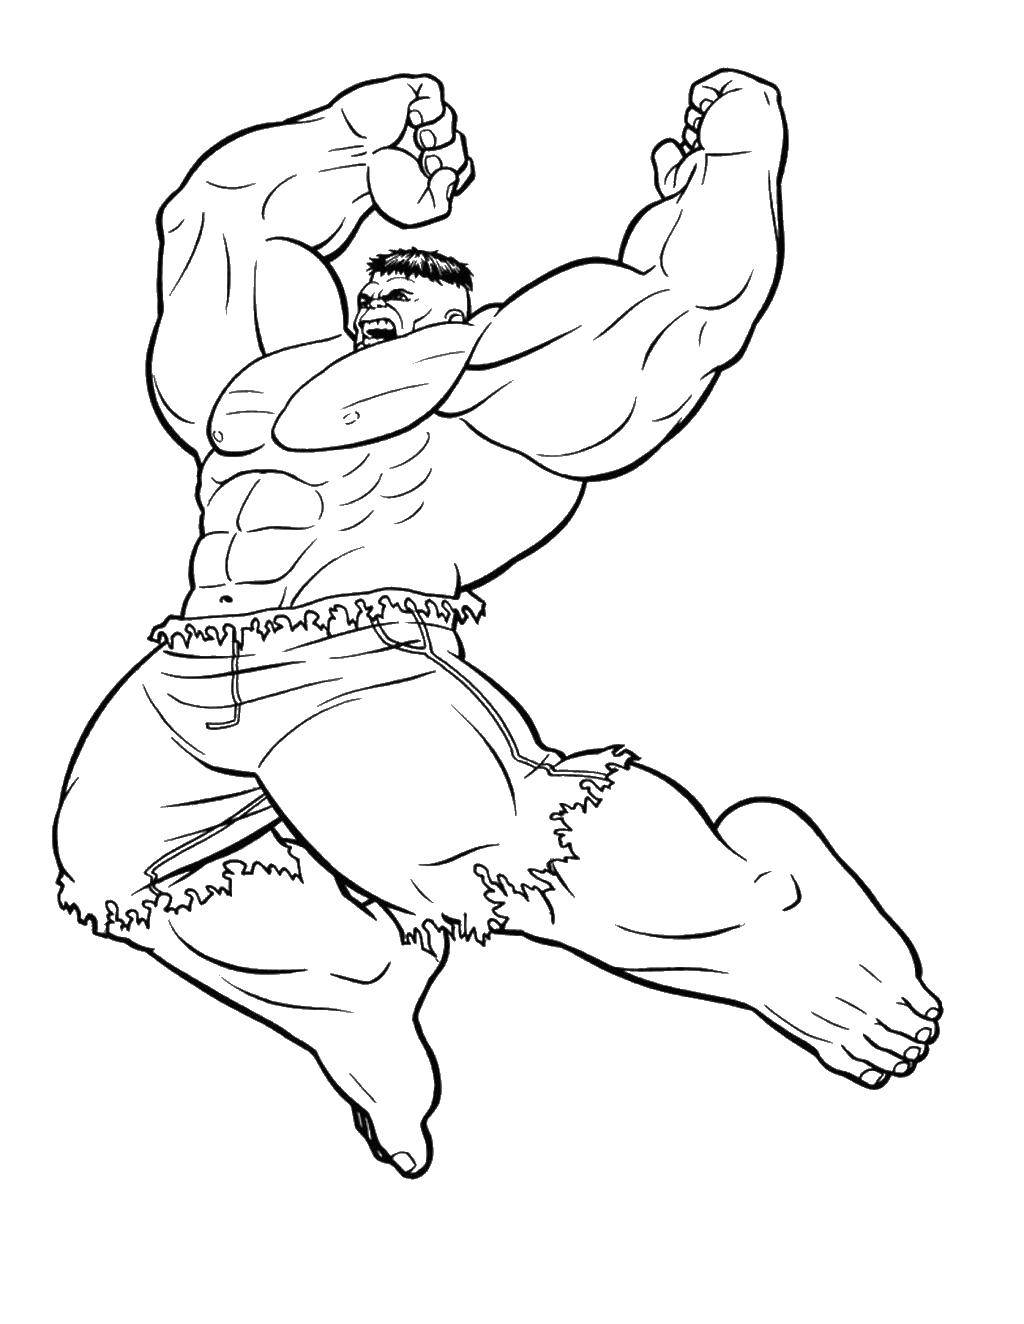 Coloring Hulk in torn pants. Category superheroes. Tags:  Hulk pants, muscles.